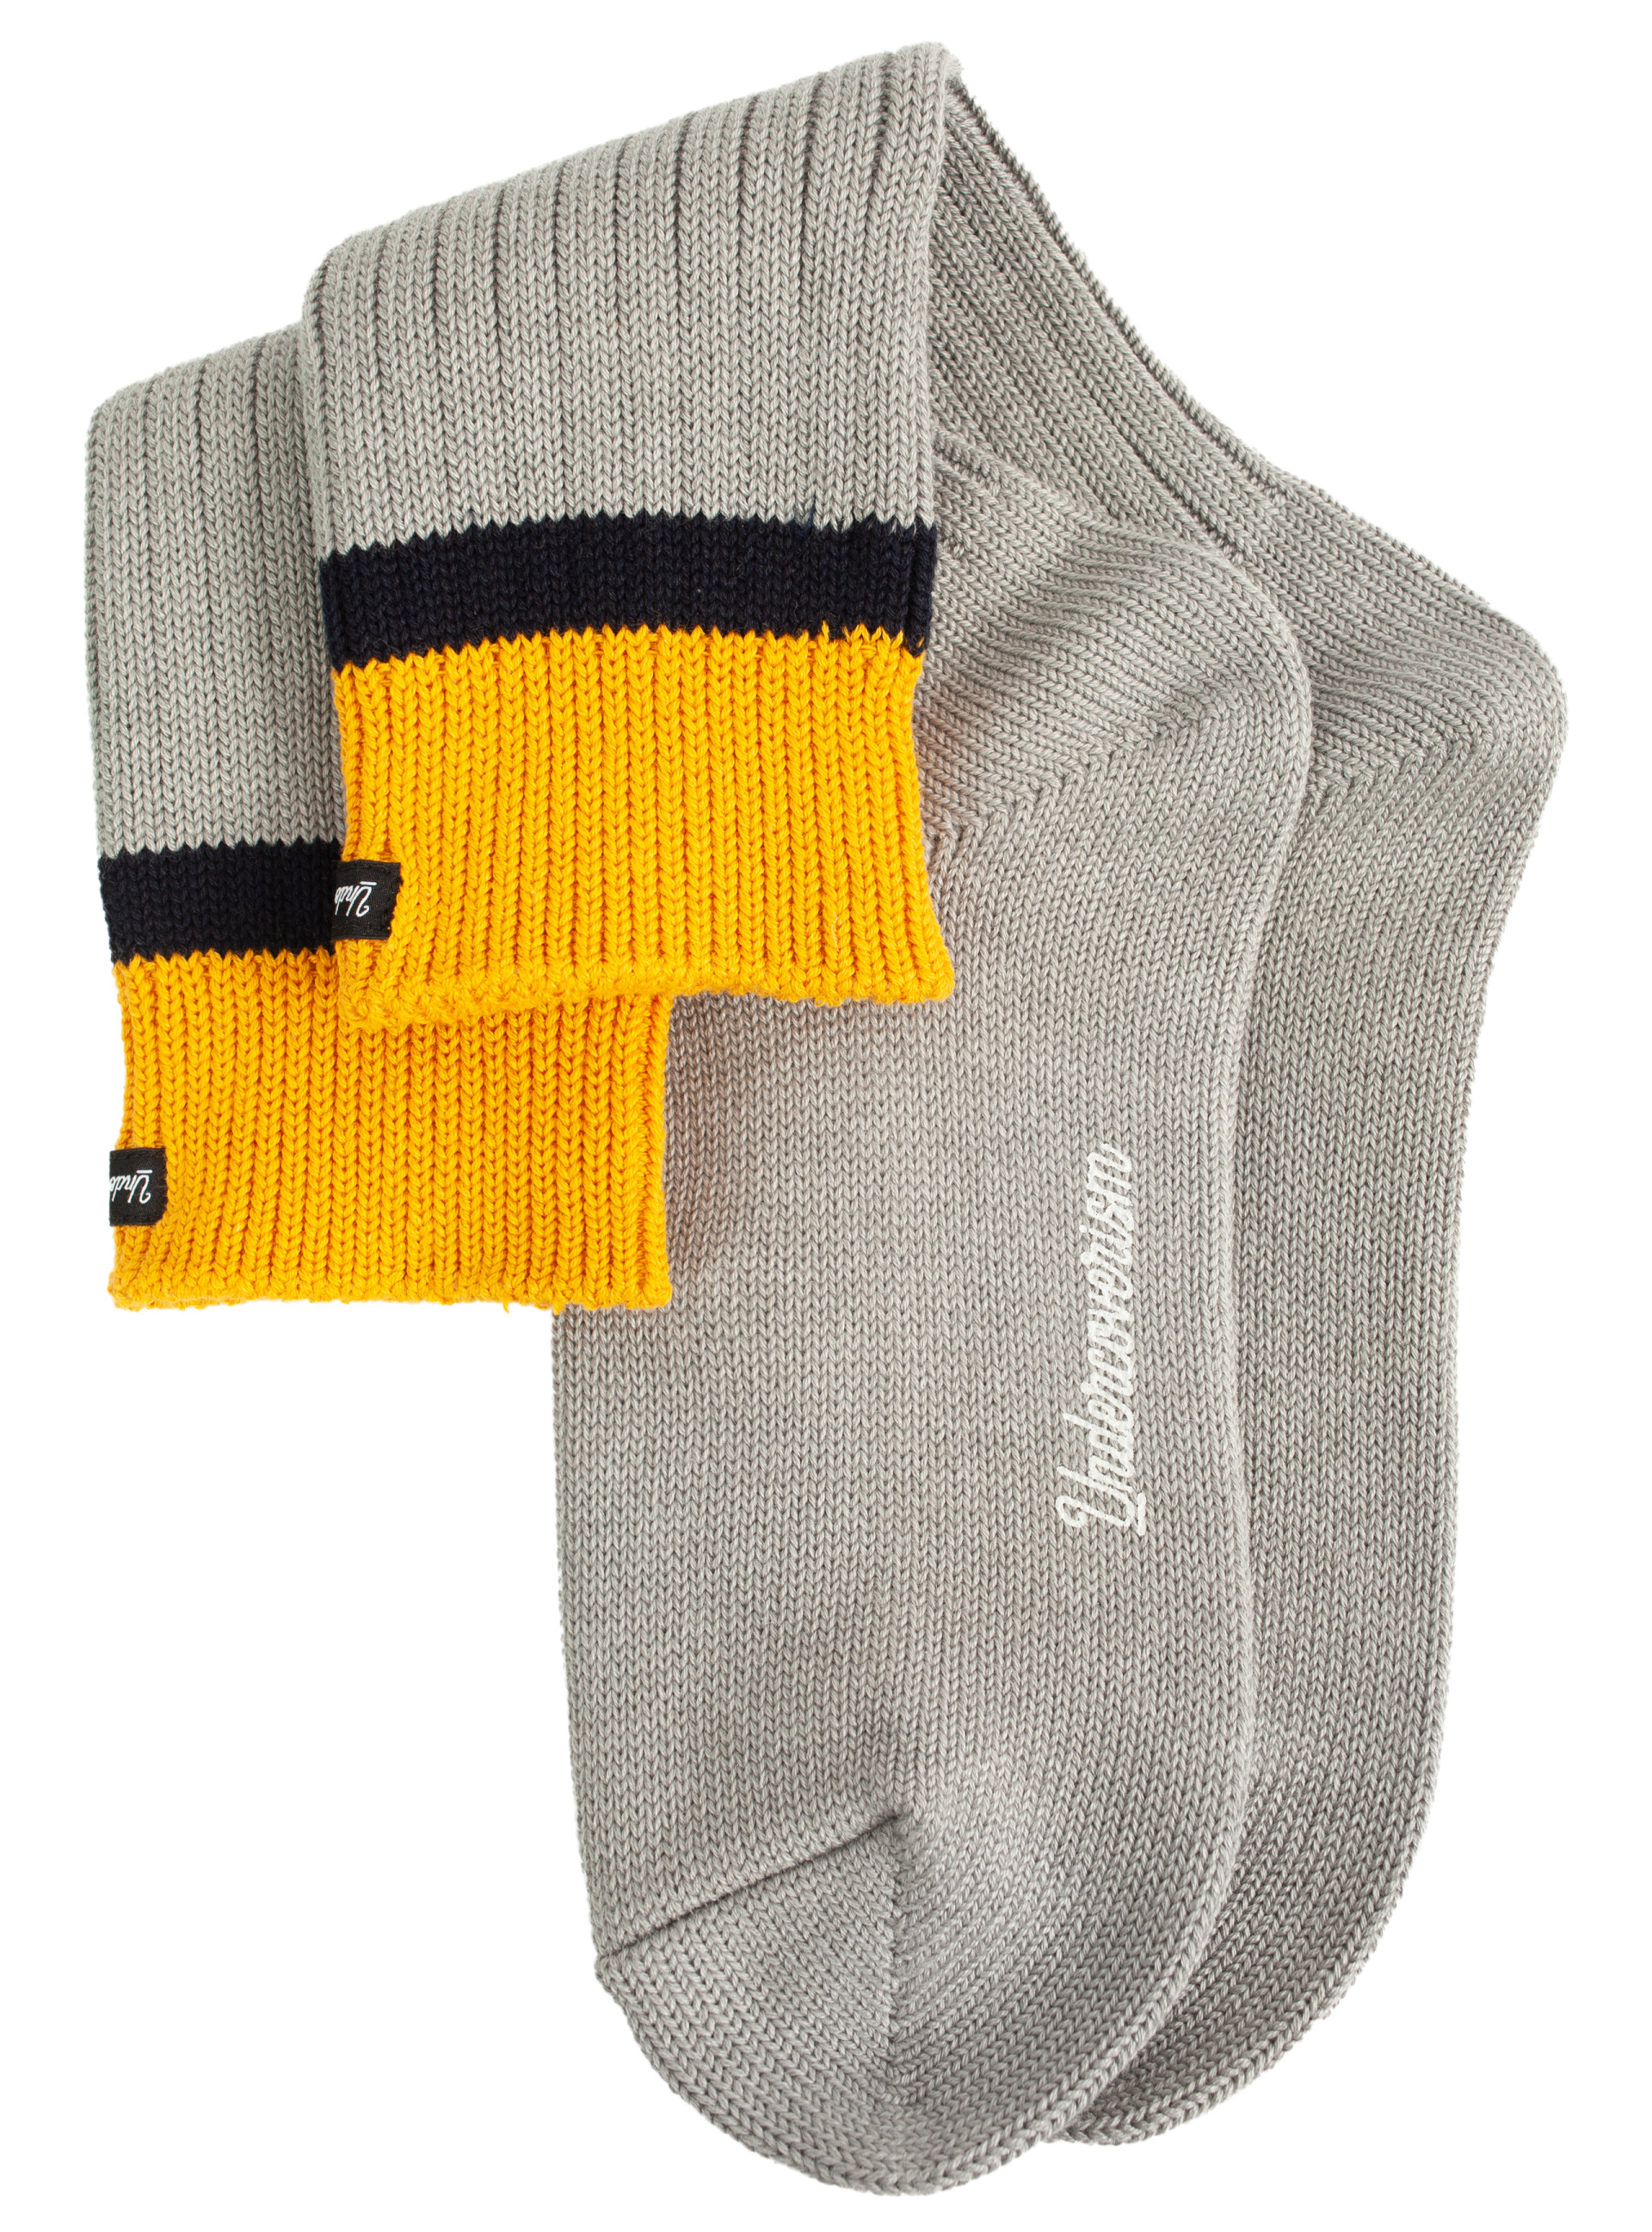 Undercover Grey calf-high knit socks